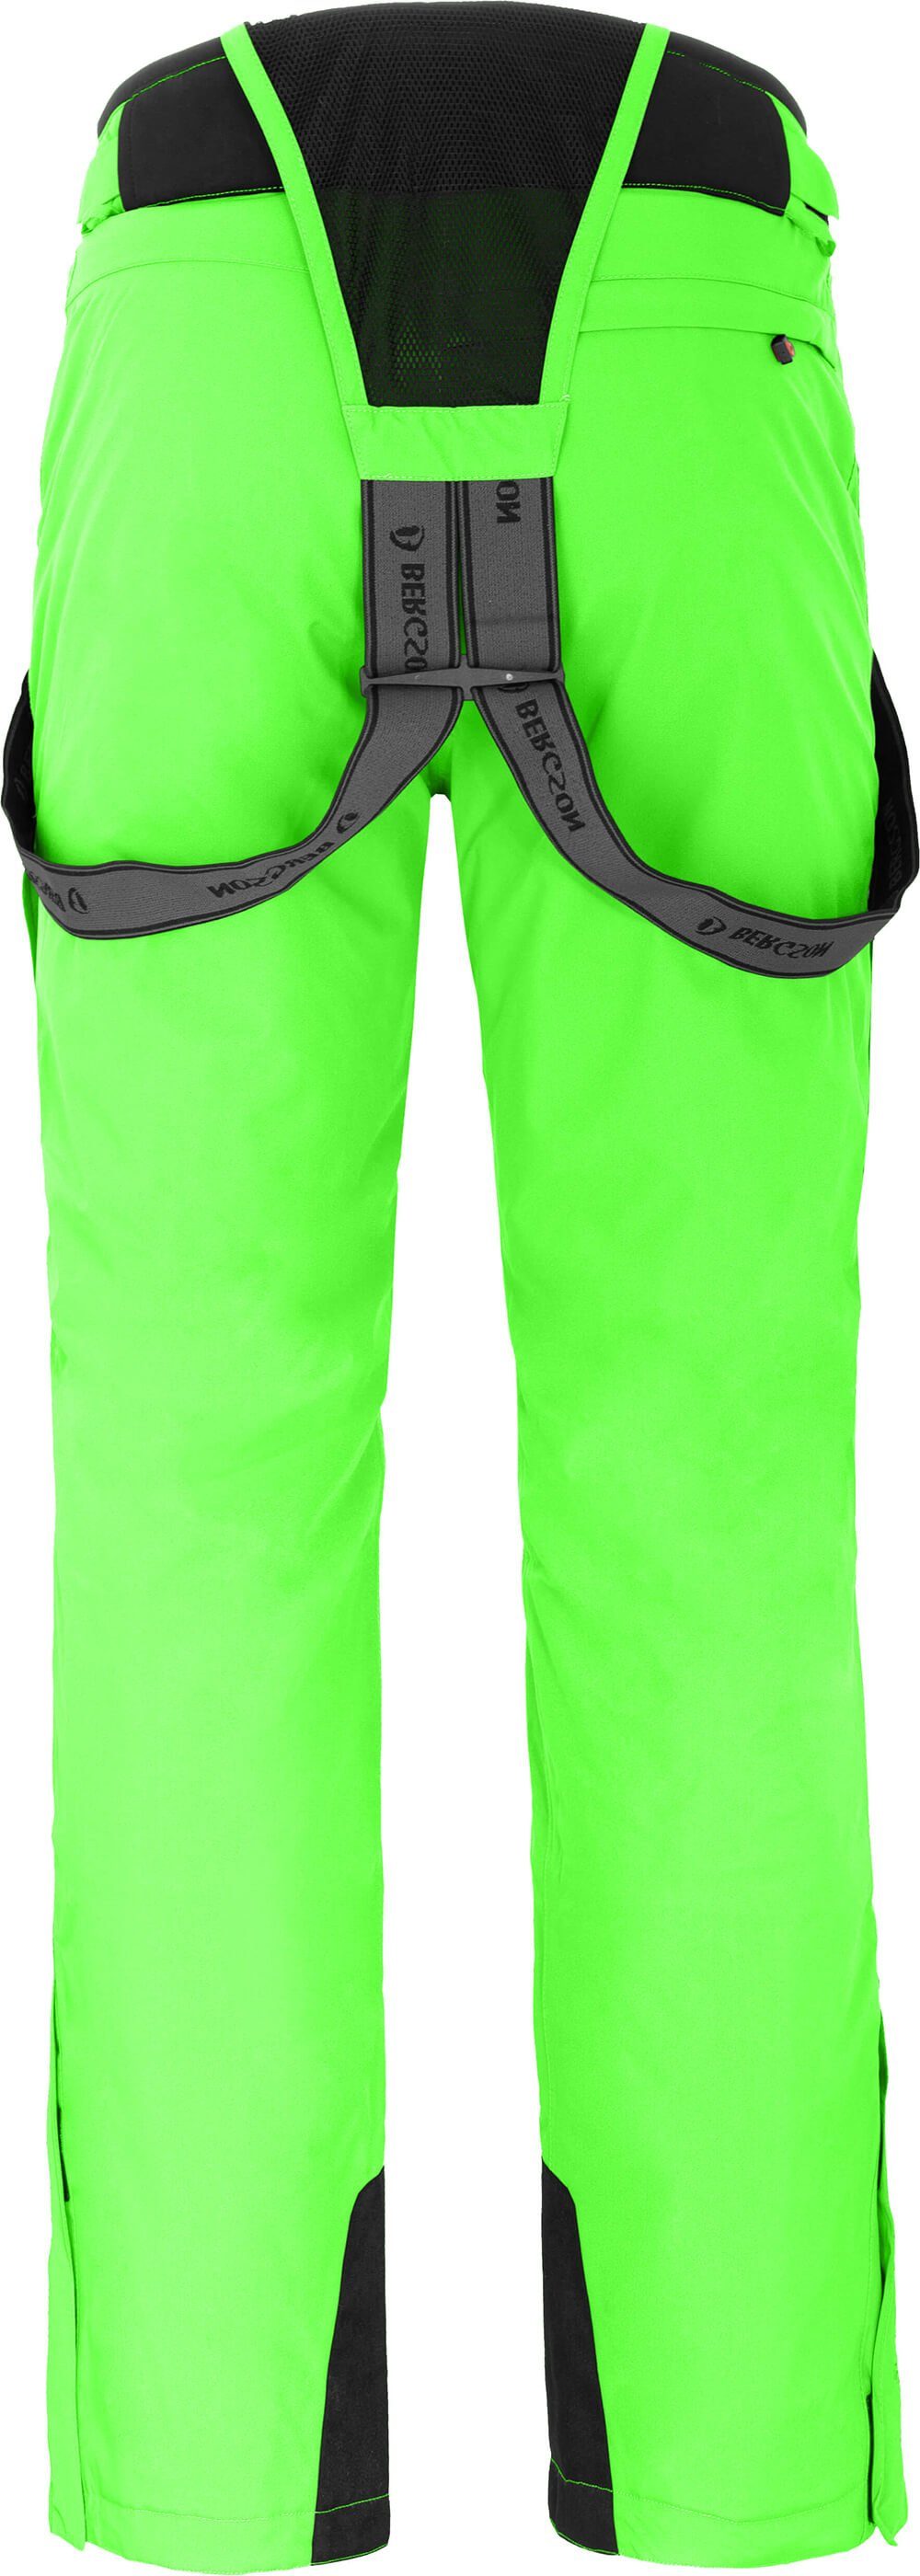 Bergson Skihose Wassersäule, 20000mm Herren unwattiert, Skihose, Kurzgrößen, grün FLEX light Gecko